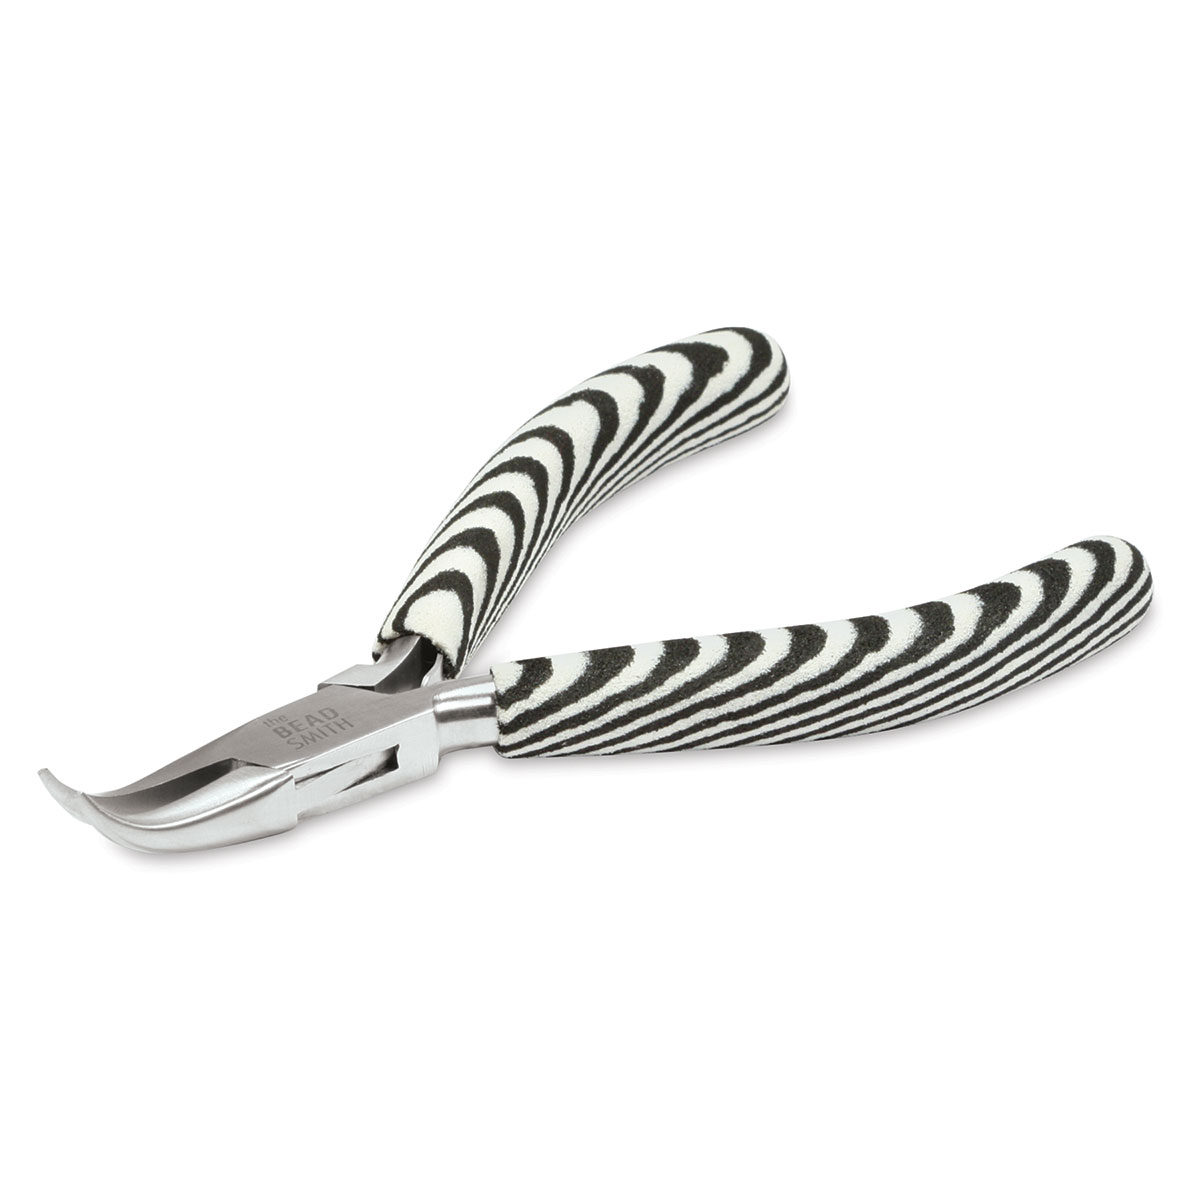 Bent Chain Nose Pliers (Zebra) – Craftgarden Beads